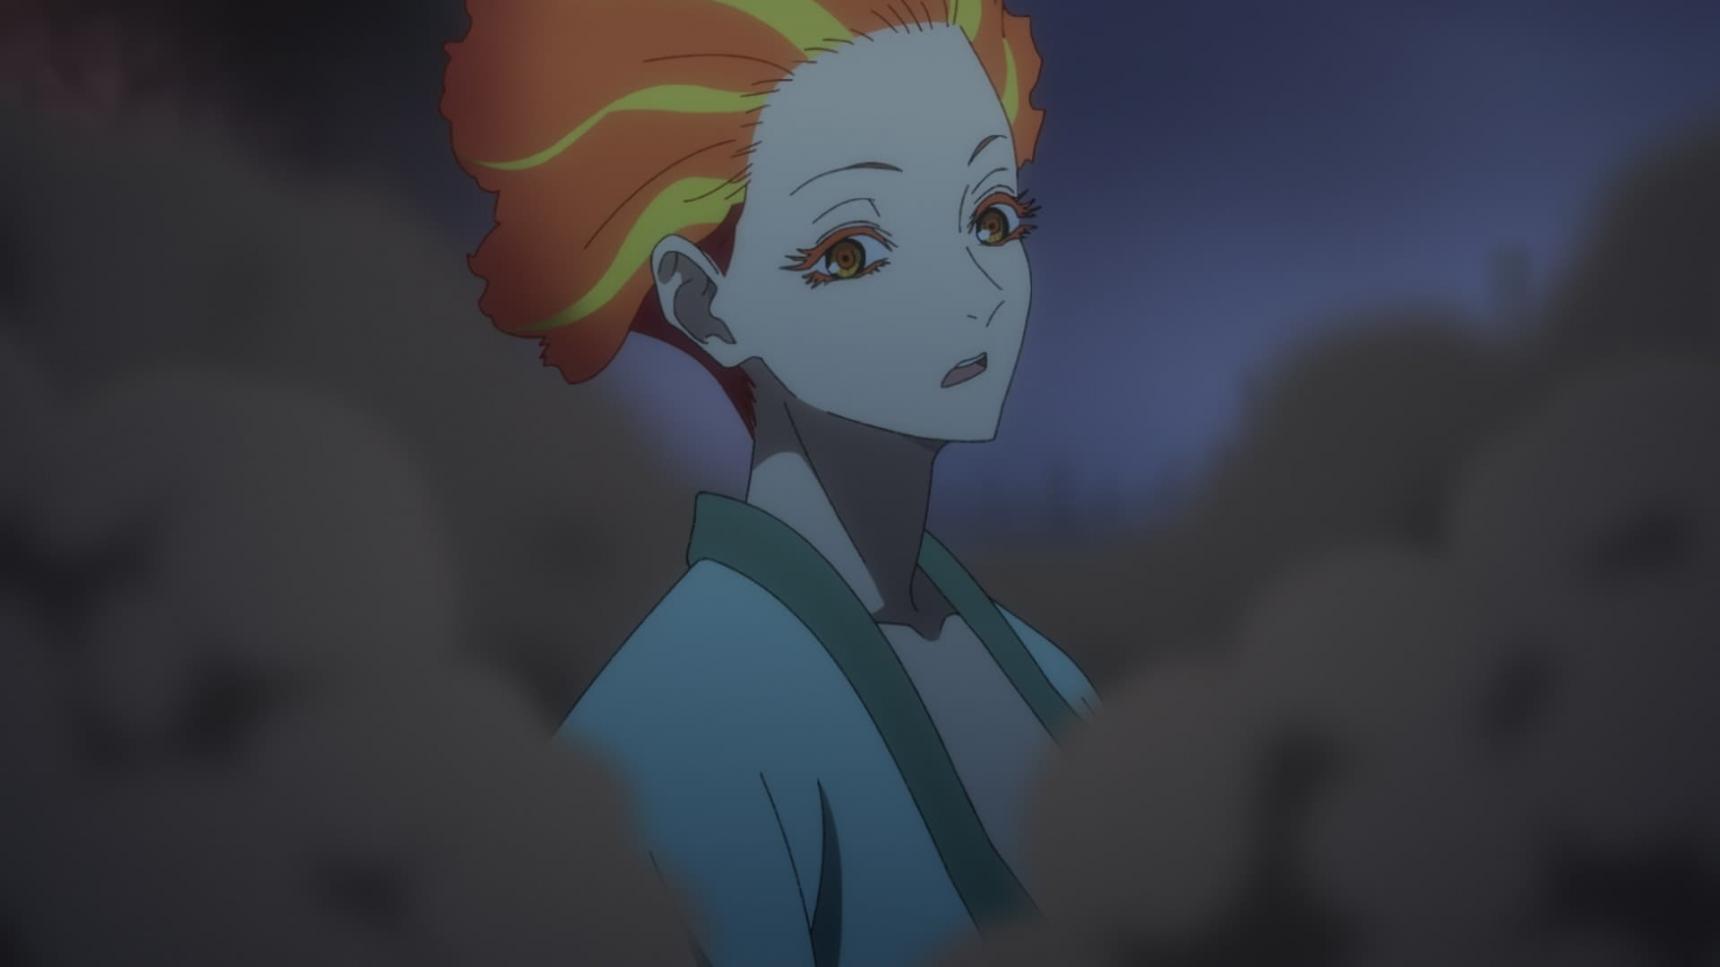 Poster del episodio 9 de Jigokuraku online